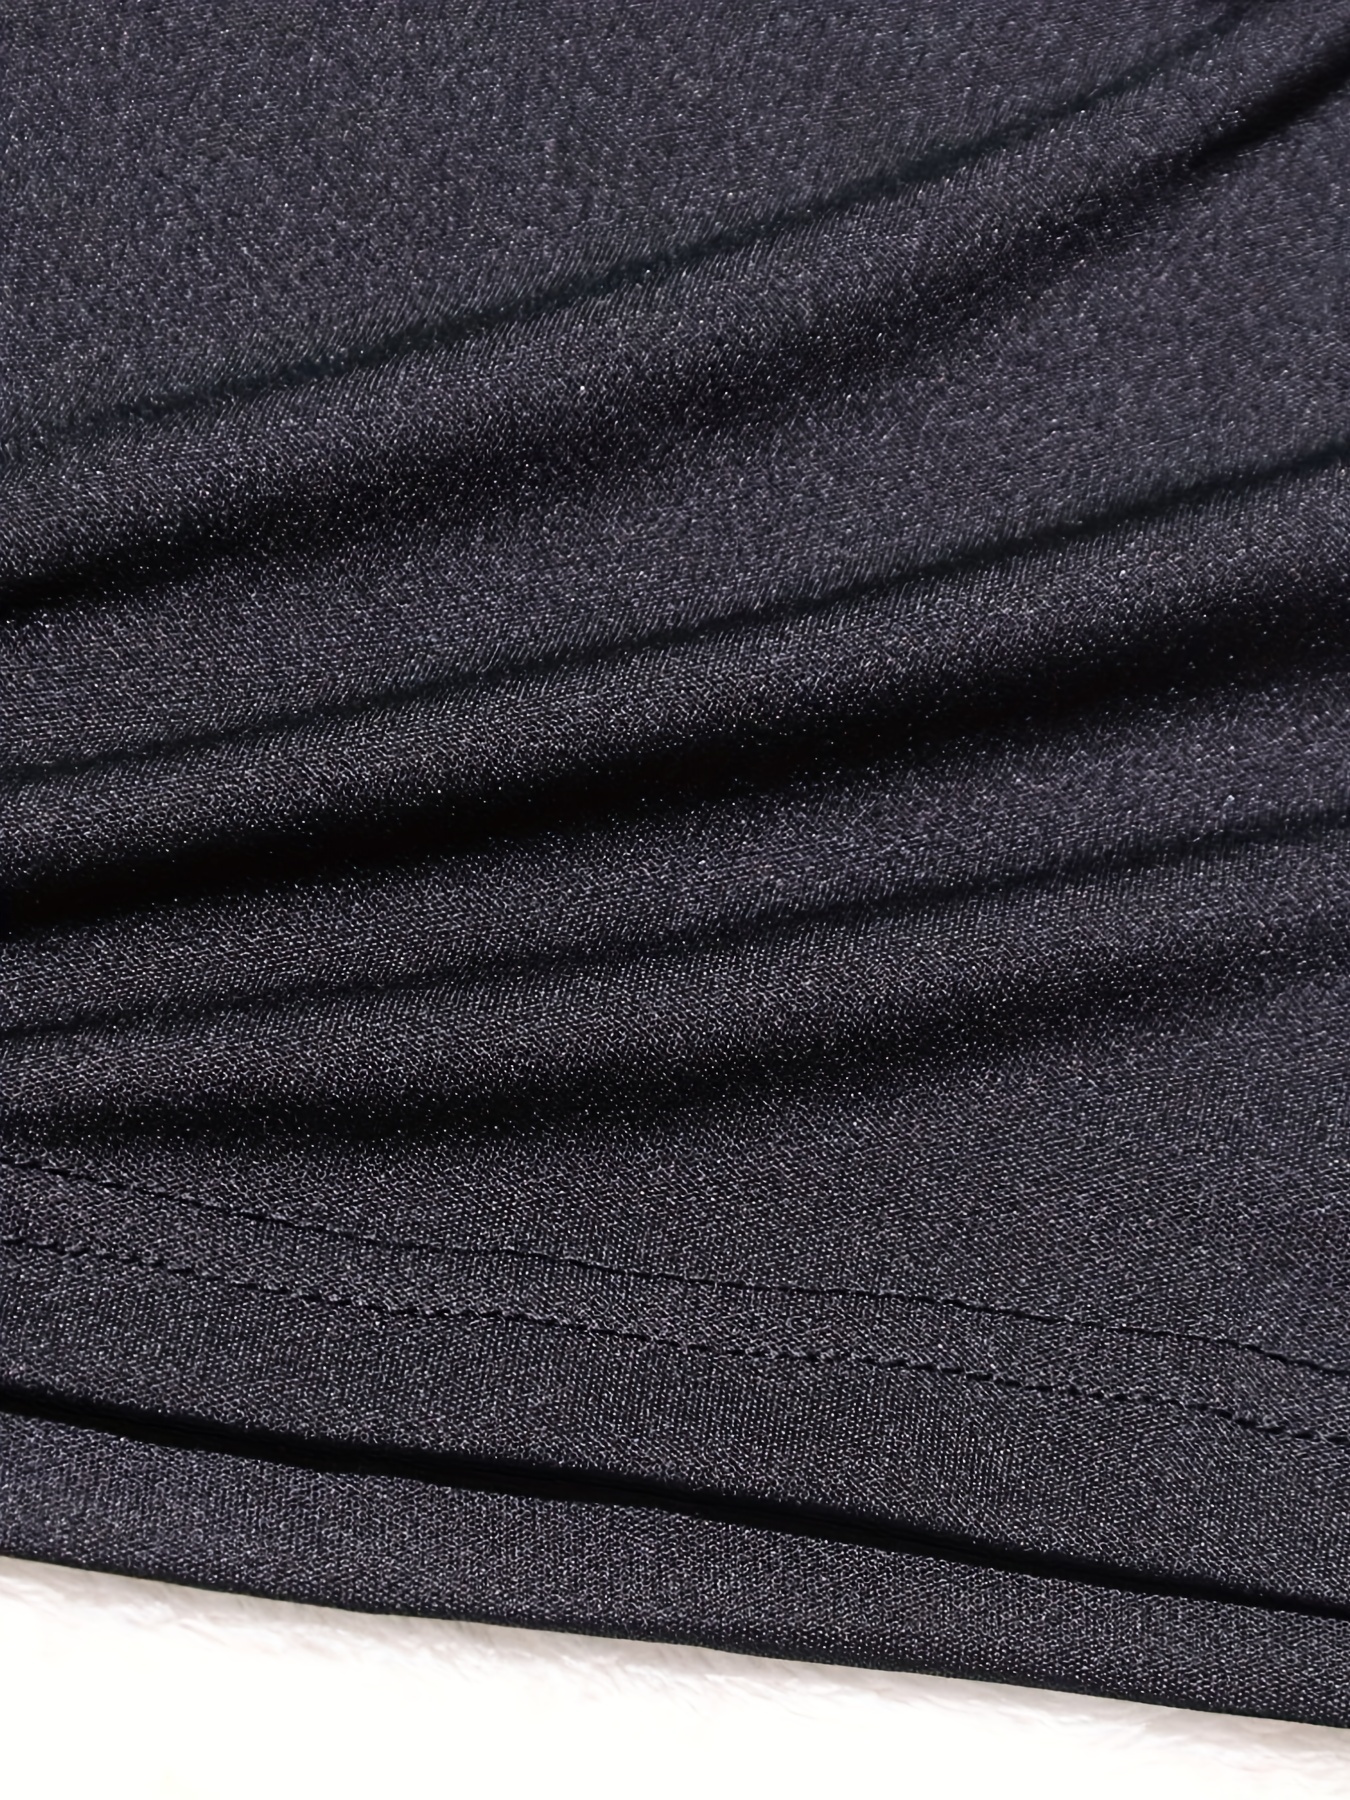 Jersey/Stretch Fabric Black Leopard Print on Grey Background